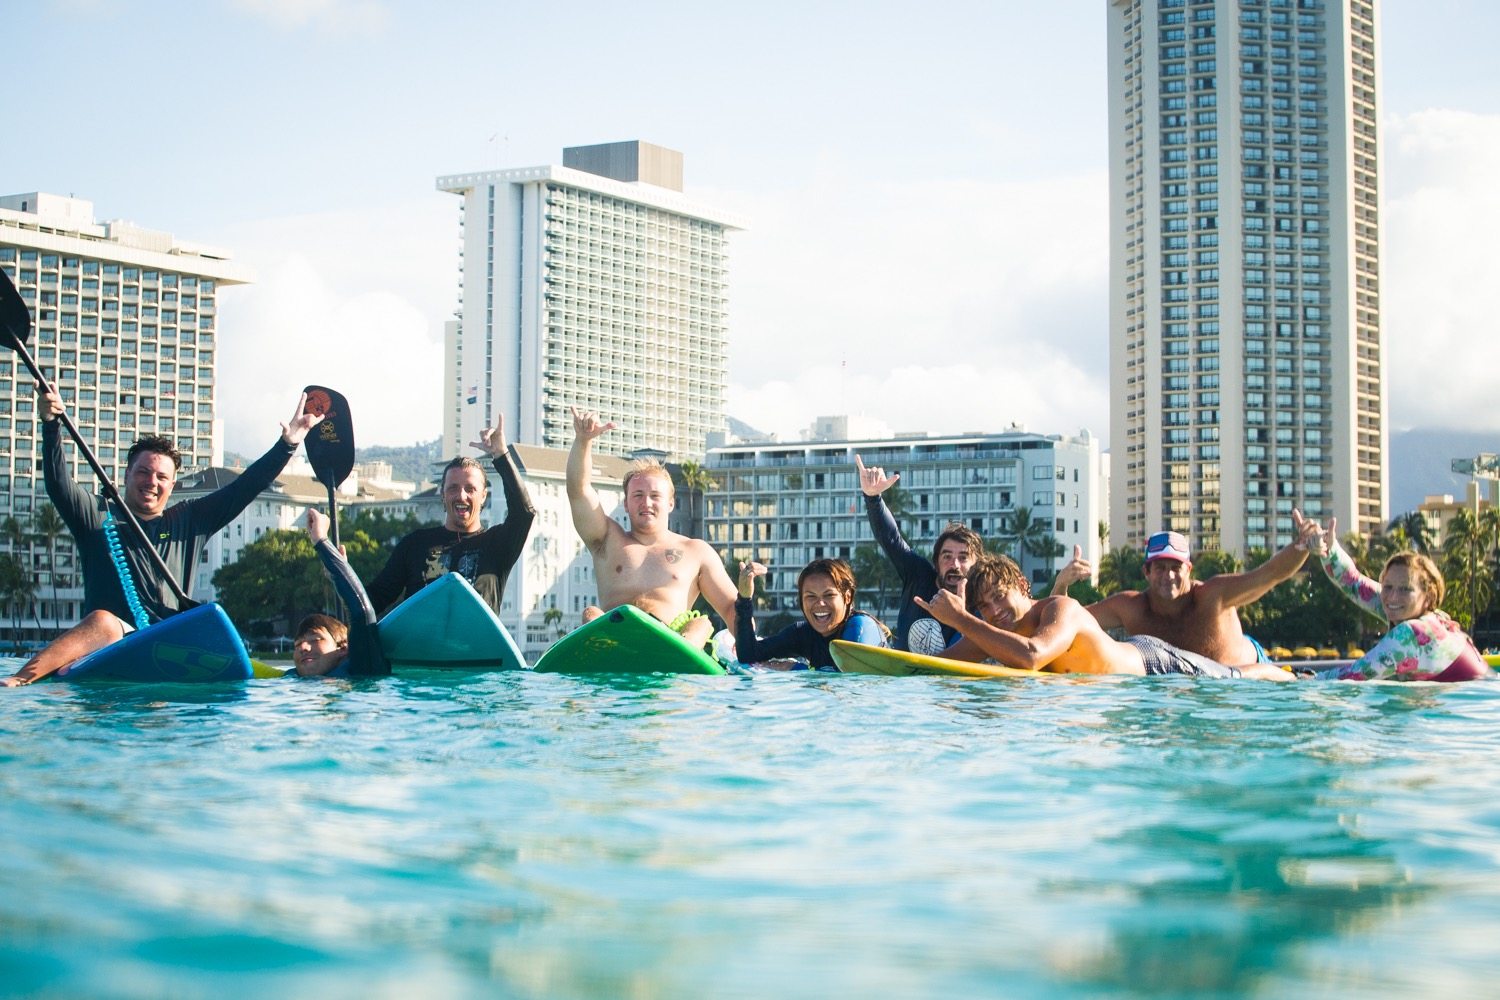 High Fives team competing in the Duke Ocean Fest in Waikiki, Honolulu, Hawaii.